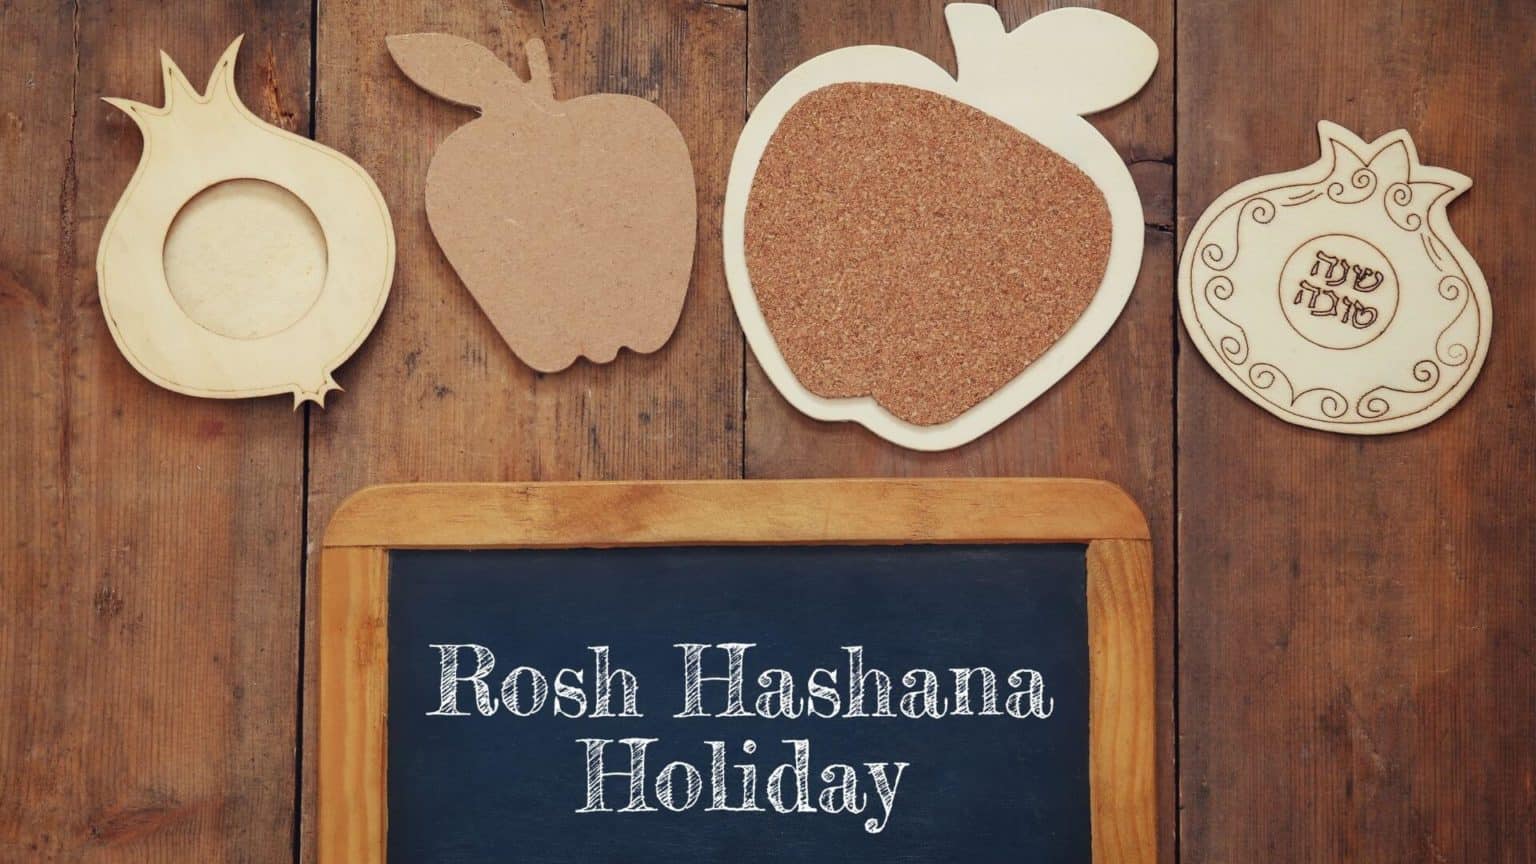 learn-rosh-hashanah-greetings-in-english-hebrew-and-yiddish-b-nai-mitzvah-academy